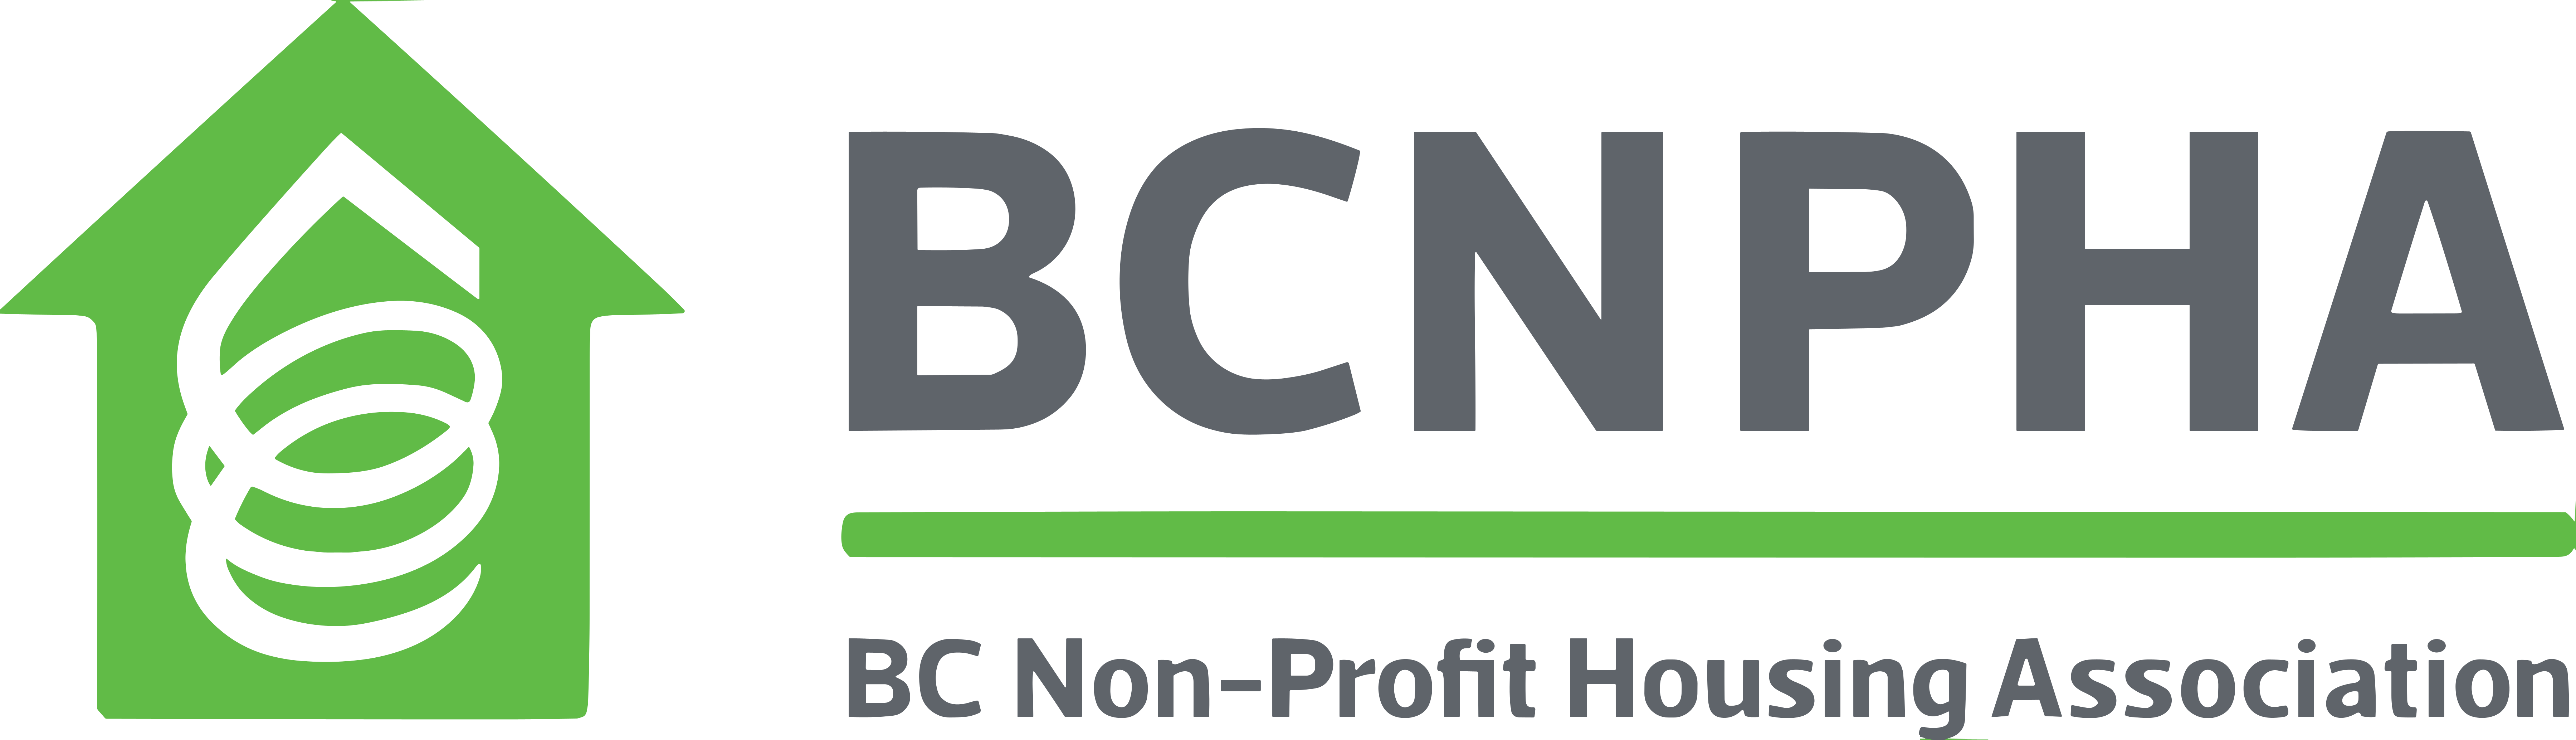 Logo for BC Non-Profit Housing Association on a transparent background